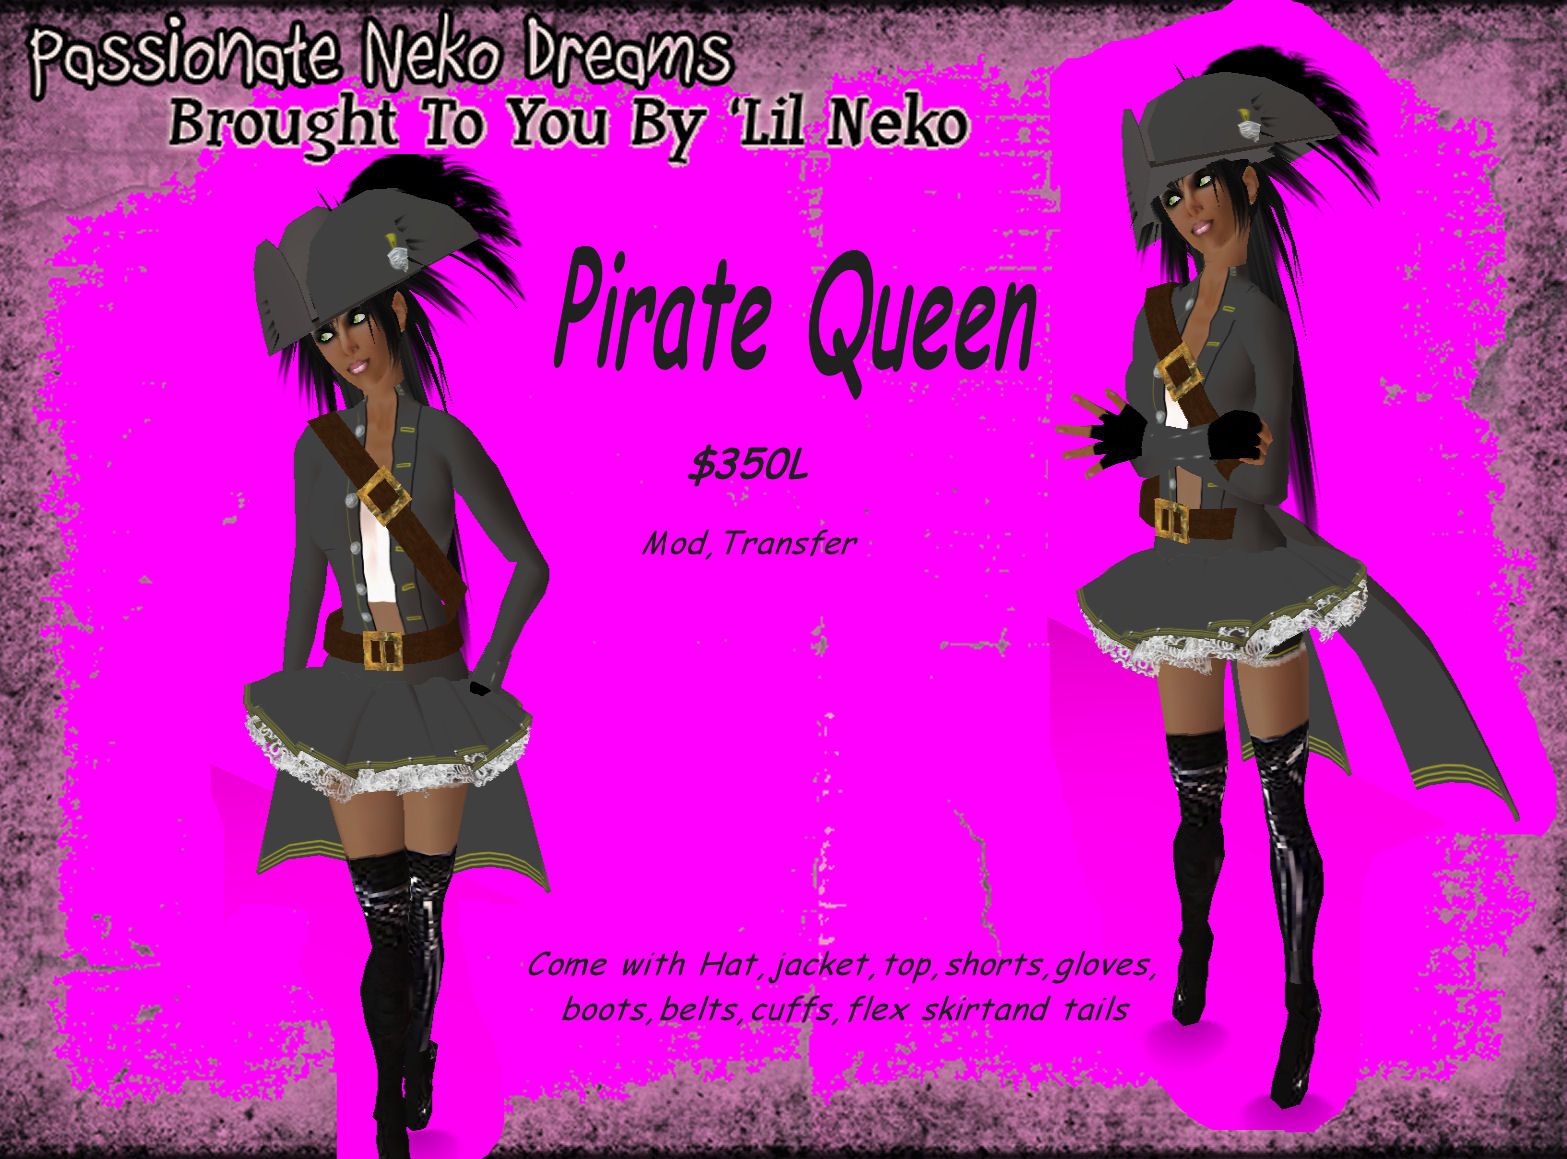 [piret+queen+ad.jpg]